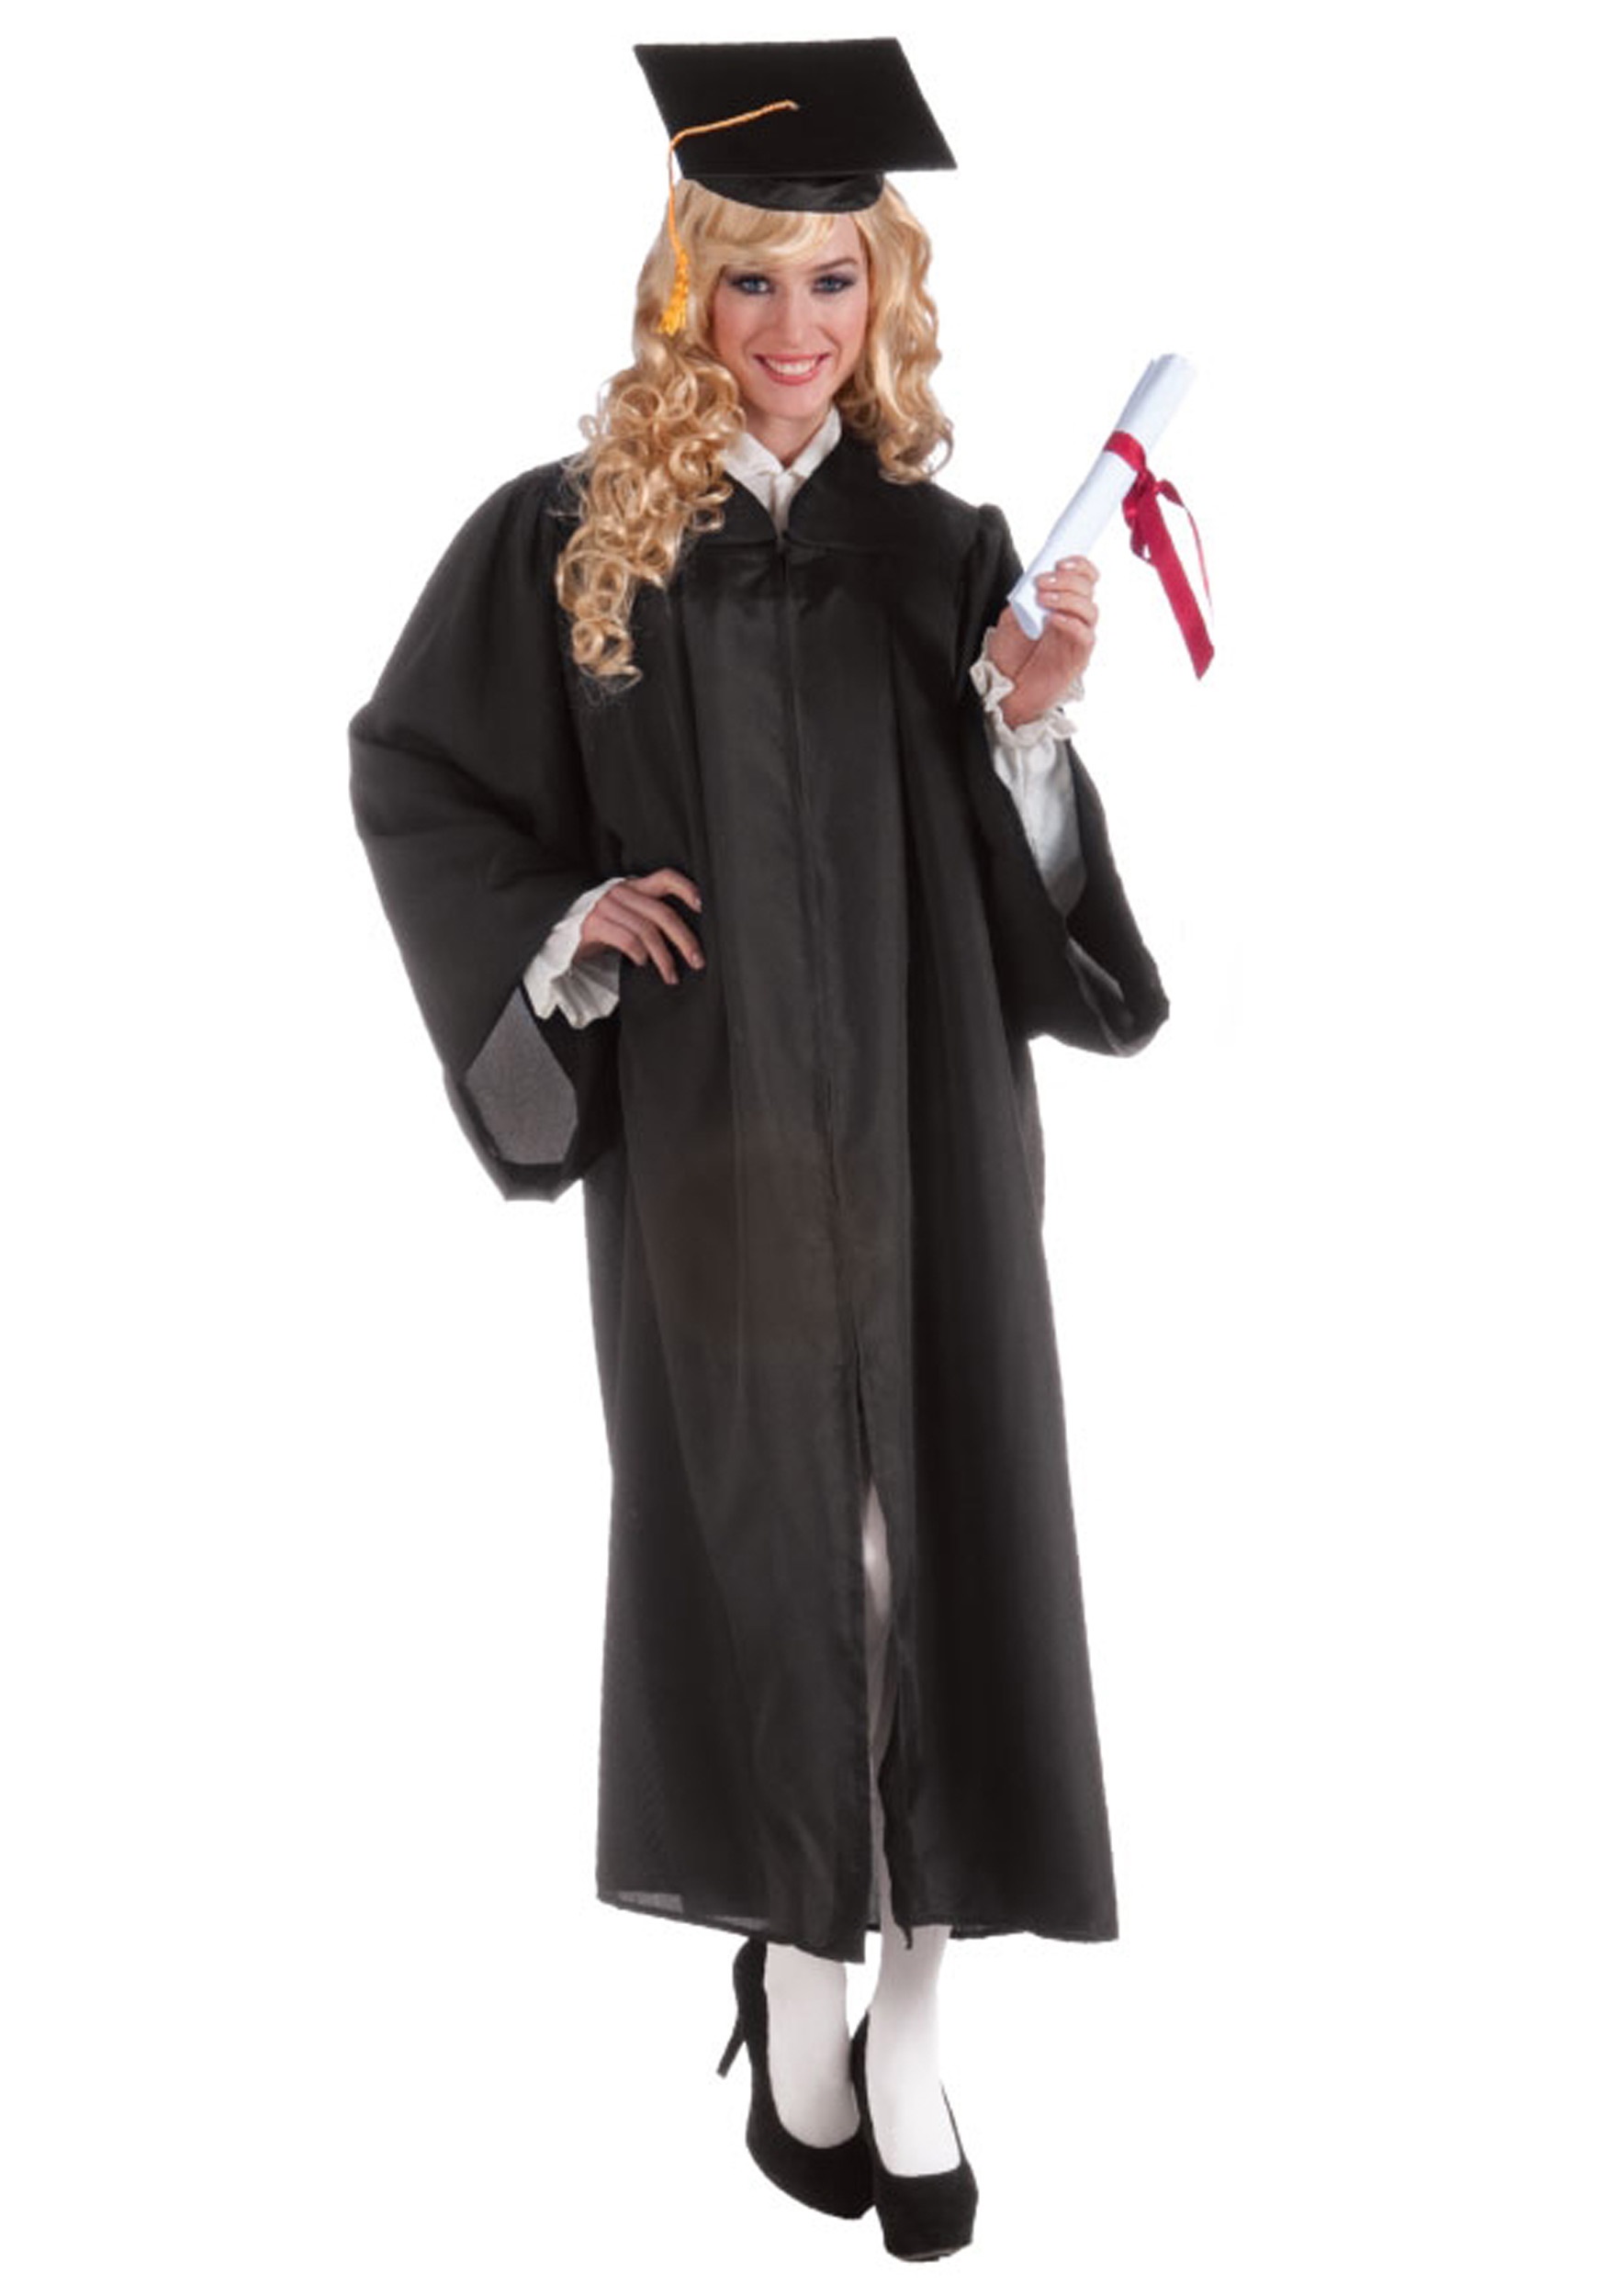 Portrait Beautiful Female Graduate Dress Graduation Stock Photo 694166764 |  Shutterstock